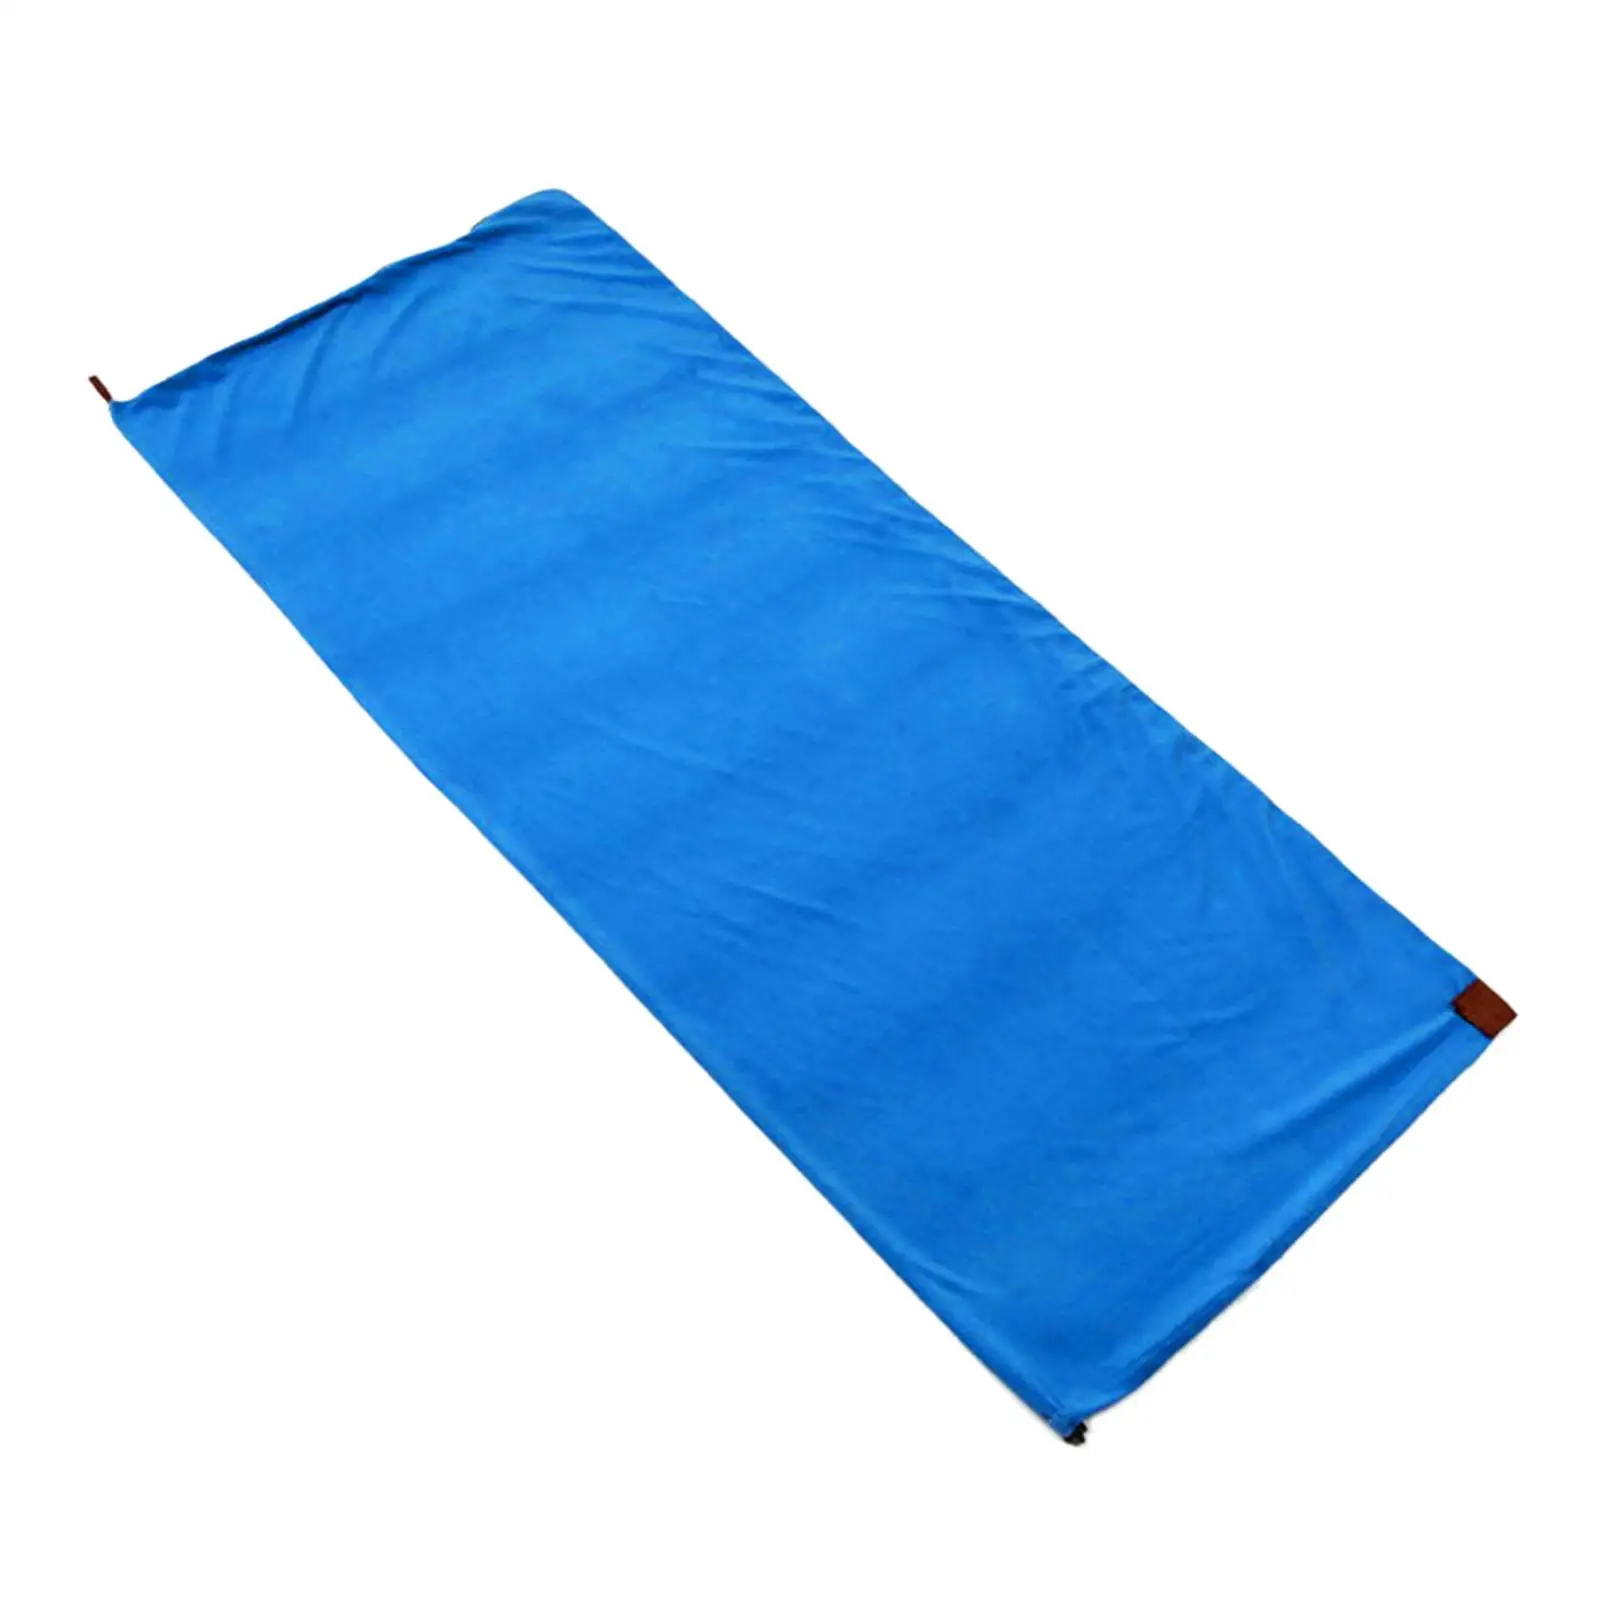 Portable Soft Fleece Sleeping Bag Liner Sleeping Sack Sheet Warm Camping Blanket for Cold Weather Hotel Business Adult Picnic